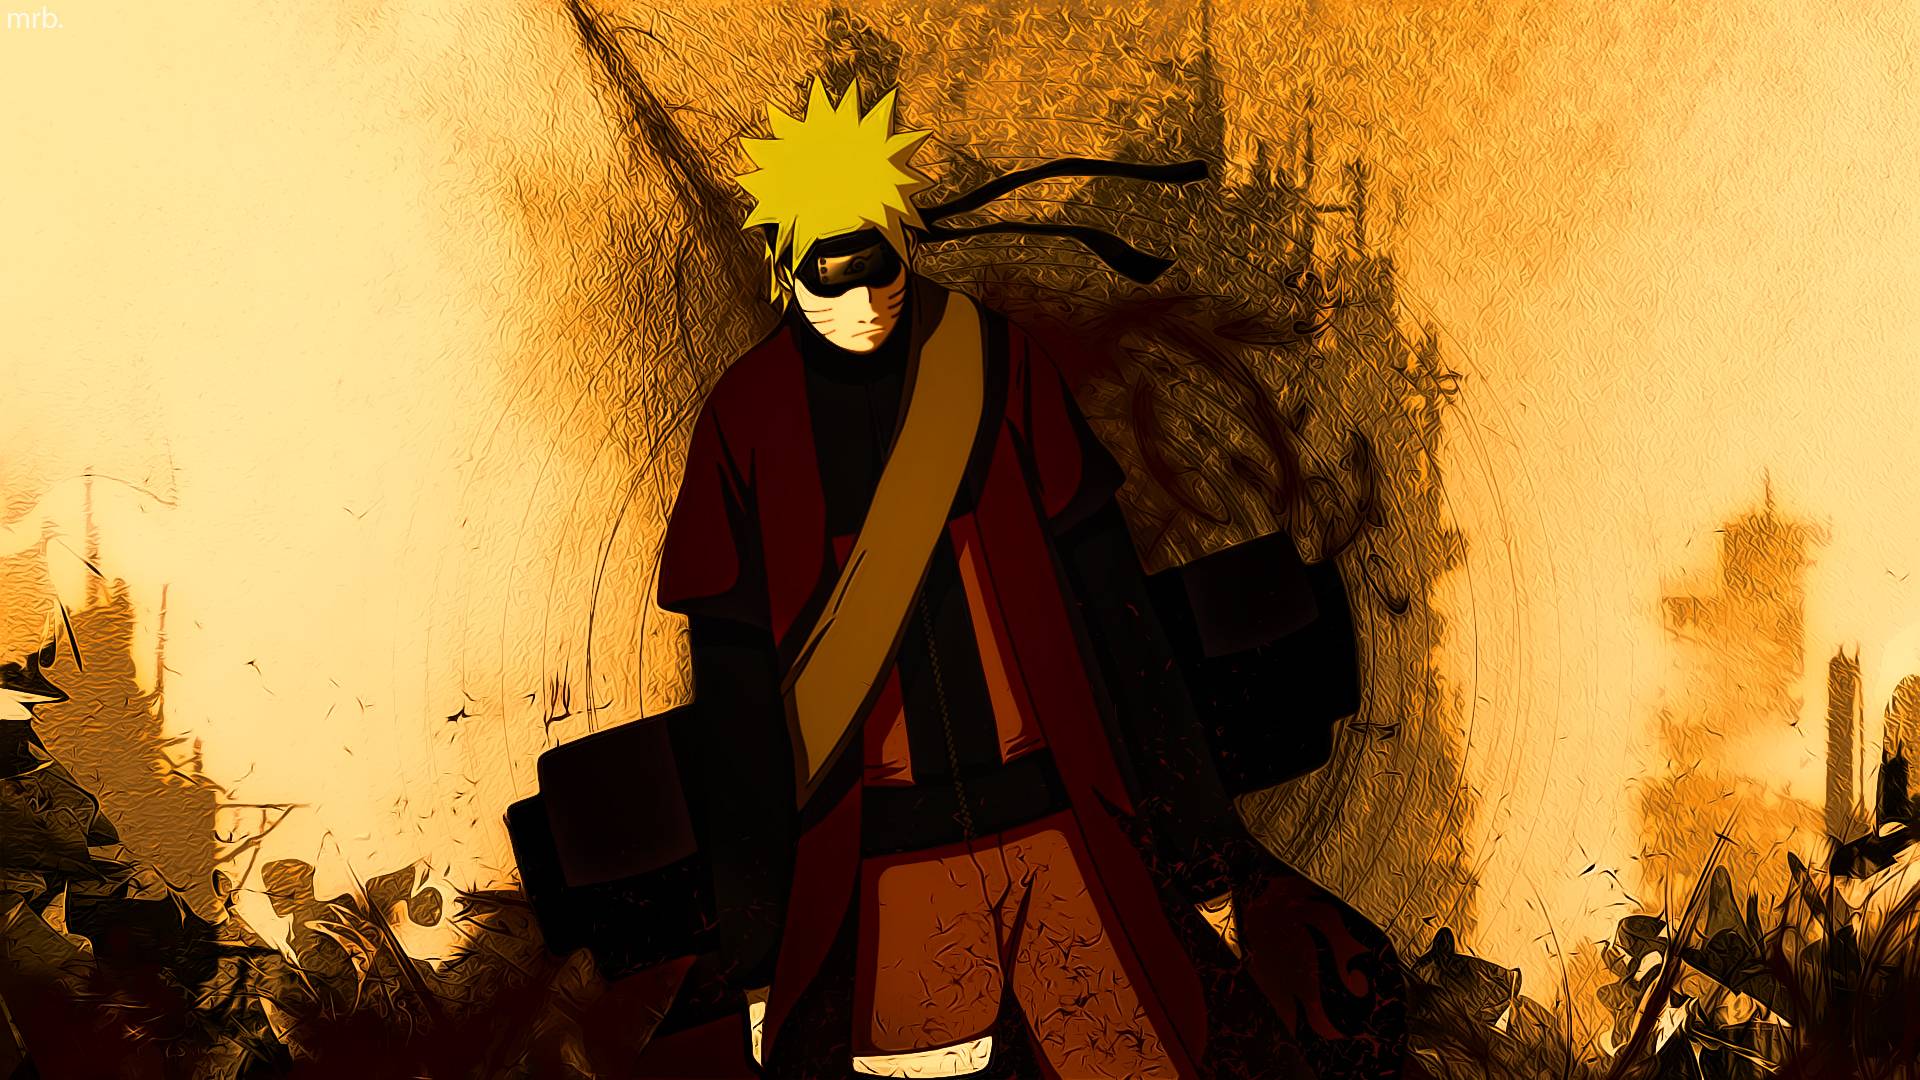 Naruto Angry Image Wallpaper. High Resolution Wallarthd.com